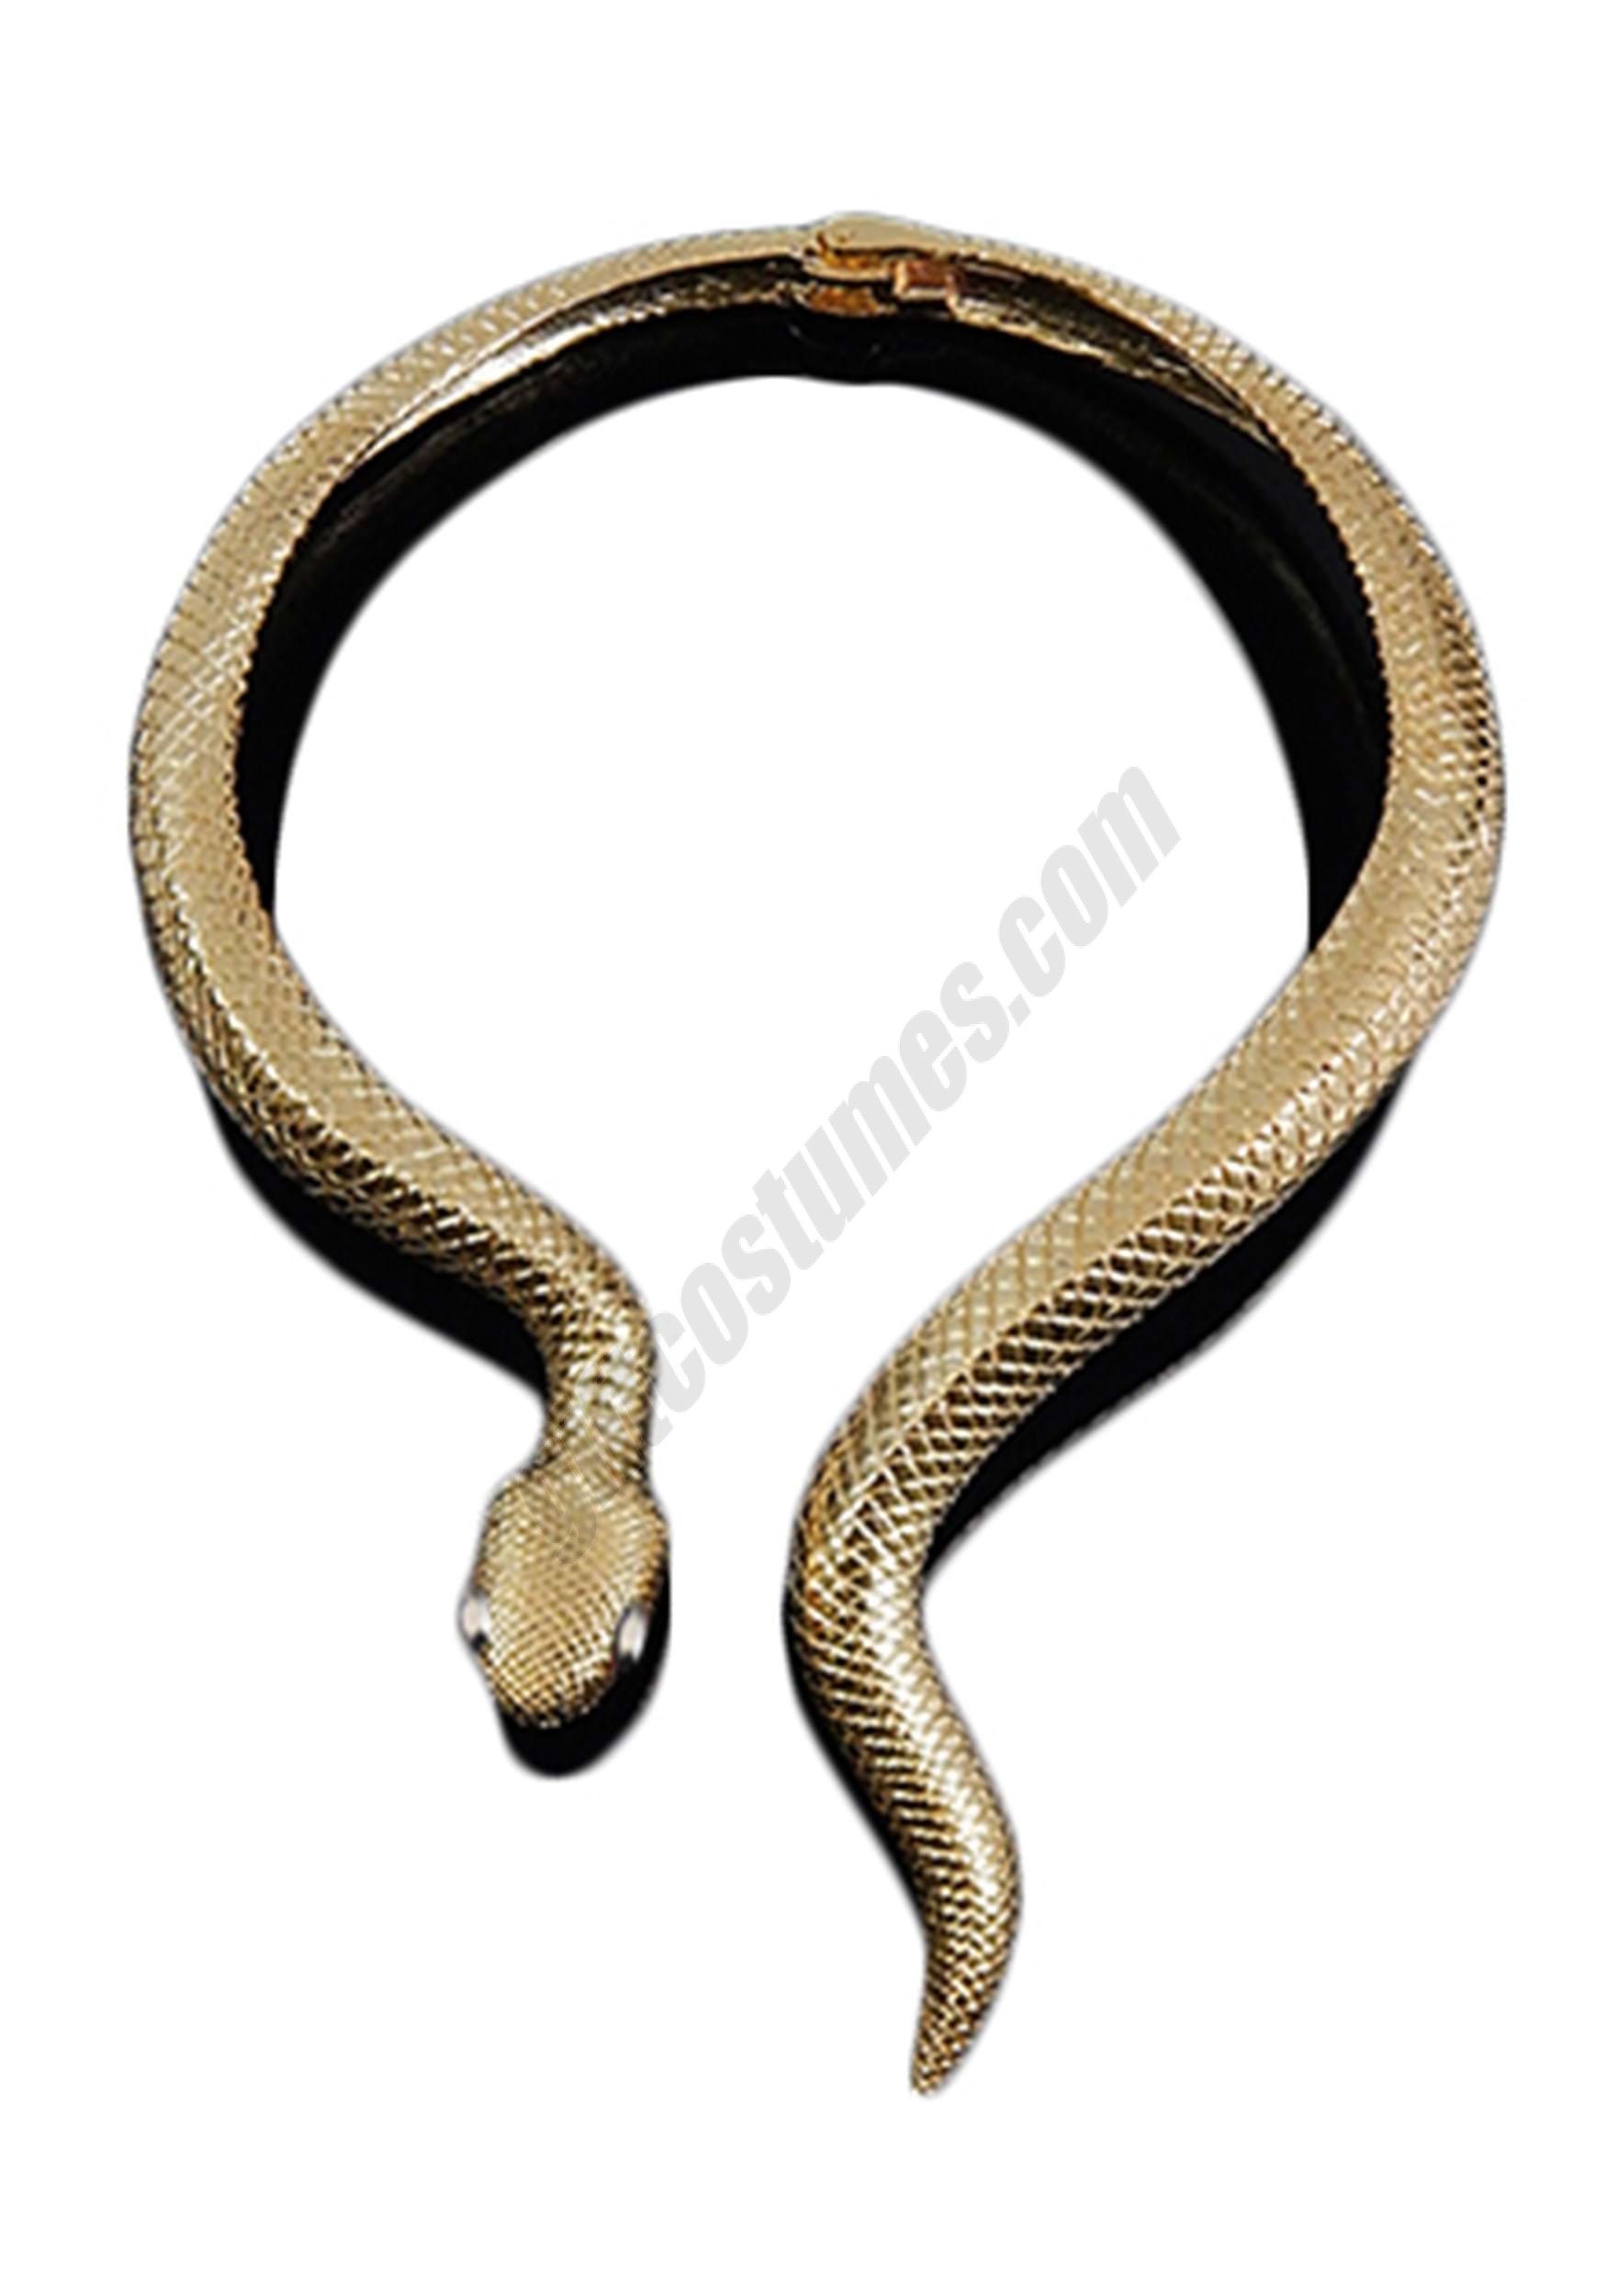 Women's Snake Hinge Choker Necklace Promotions - Women's Snake Hinge Choker Necklace Promotions